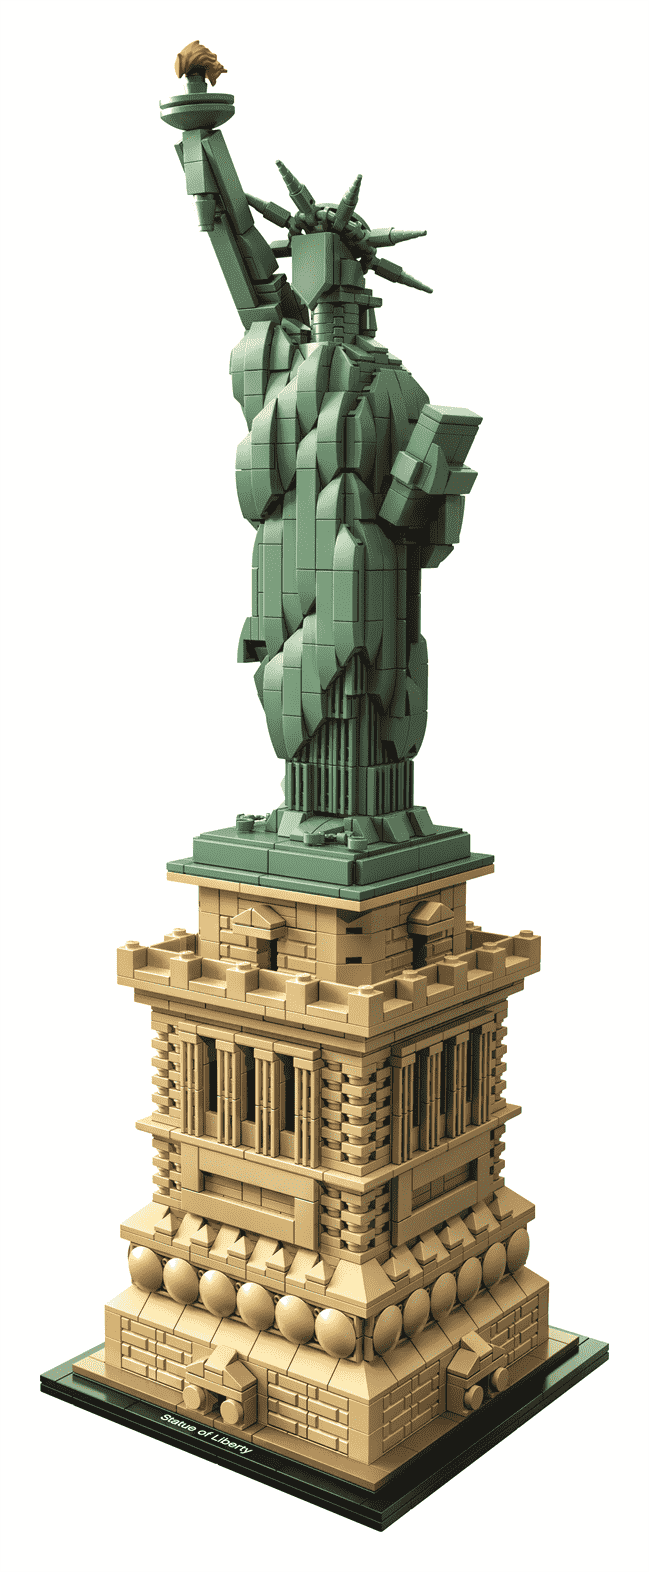 LEGO: Architecture - Statue of Liberty